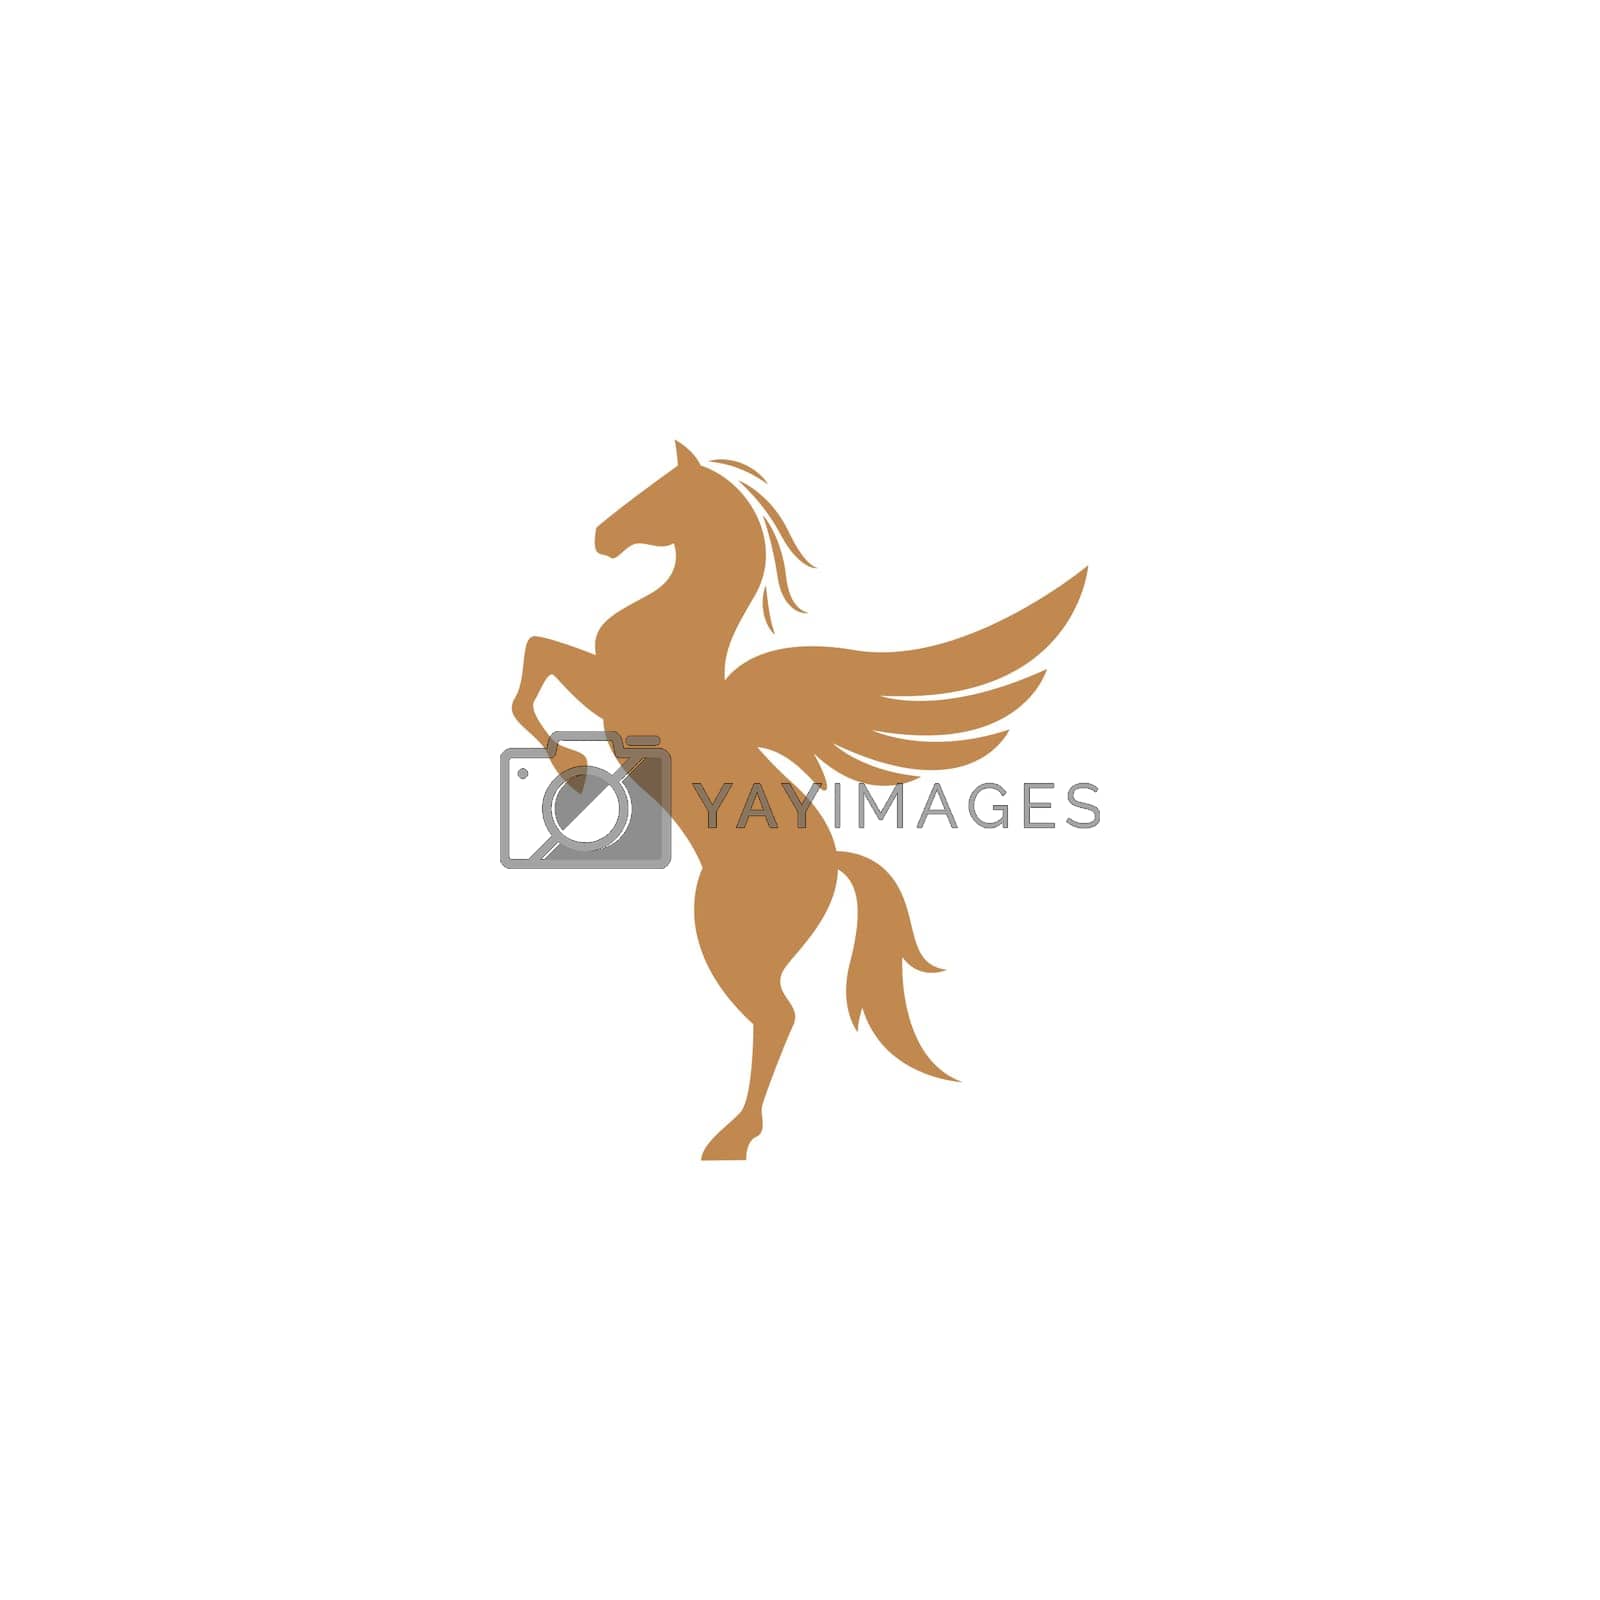 Royalty free image of Pegasus logo icon design illustration by bellaxbudhong3